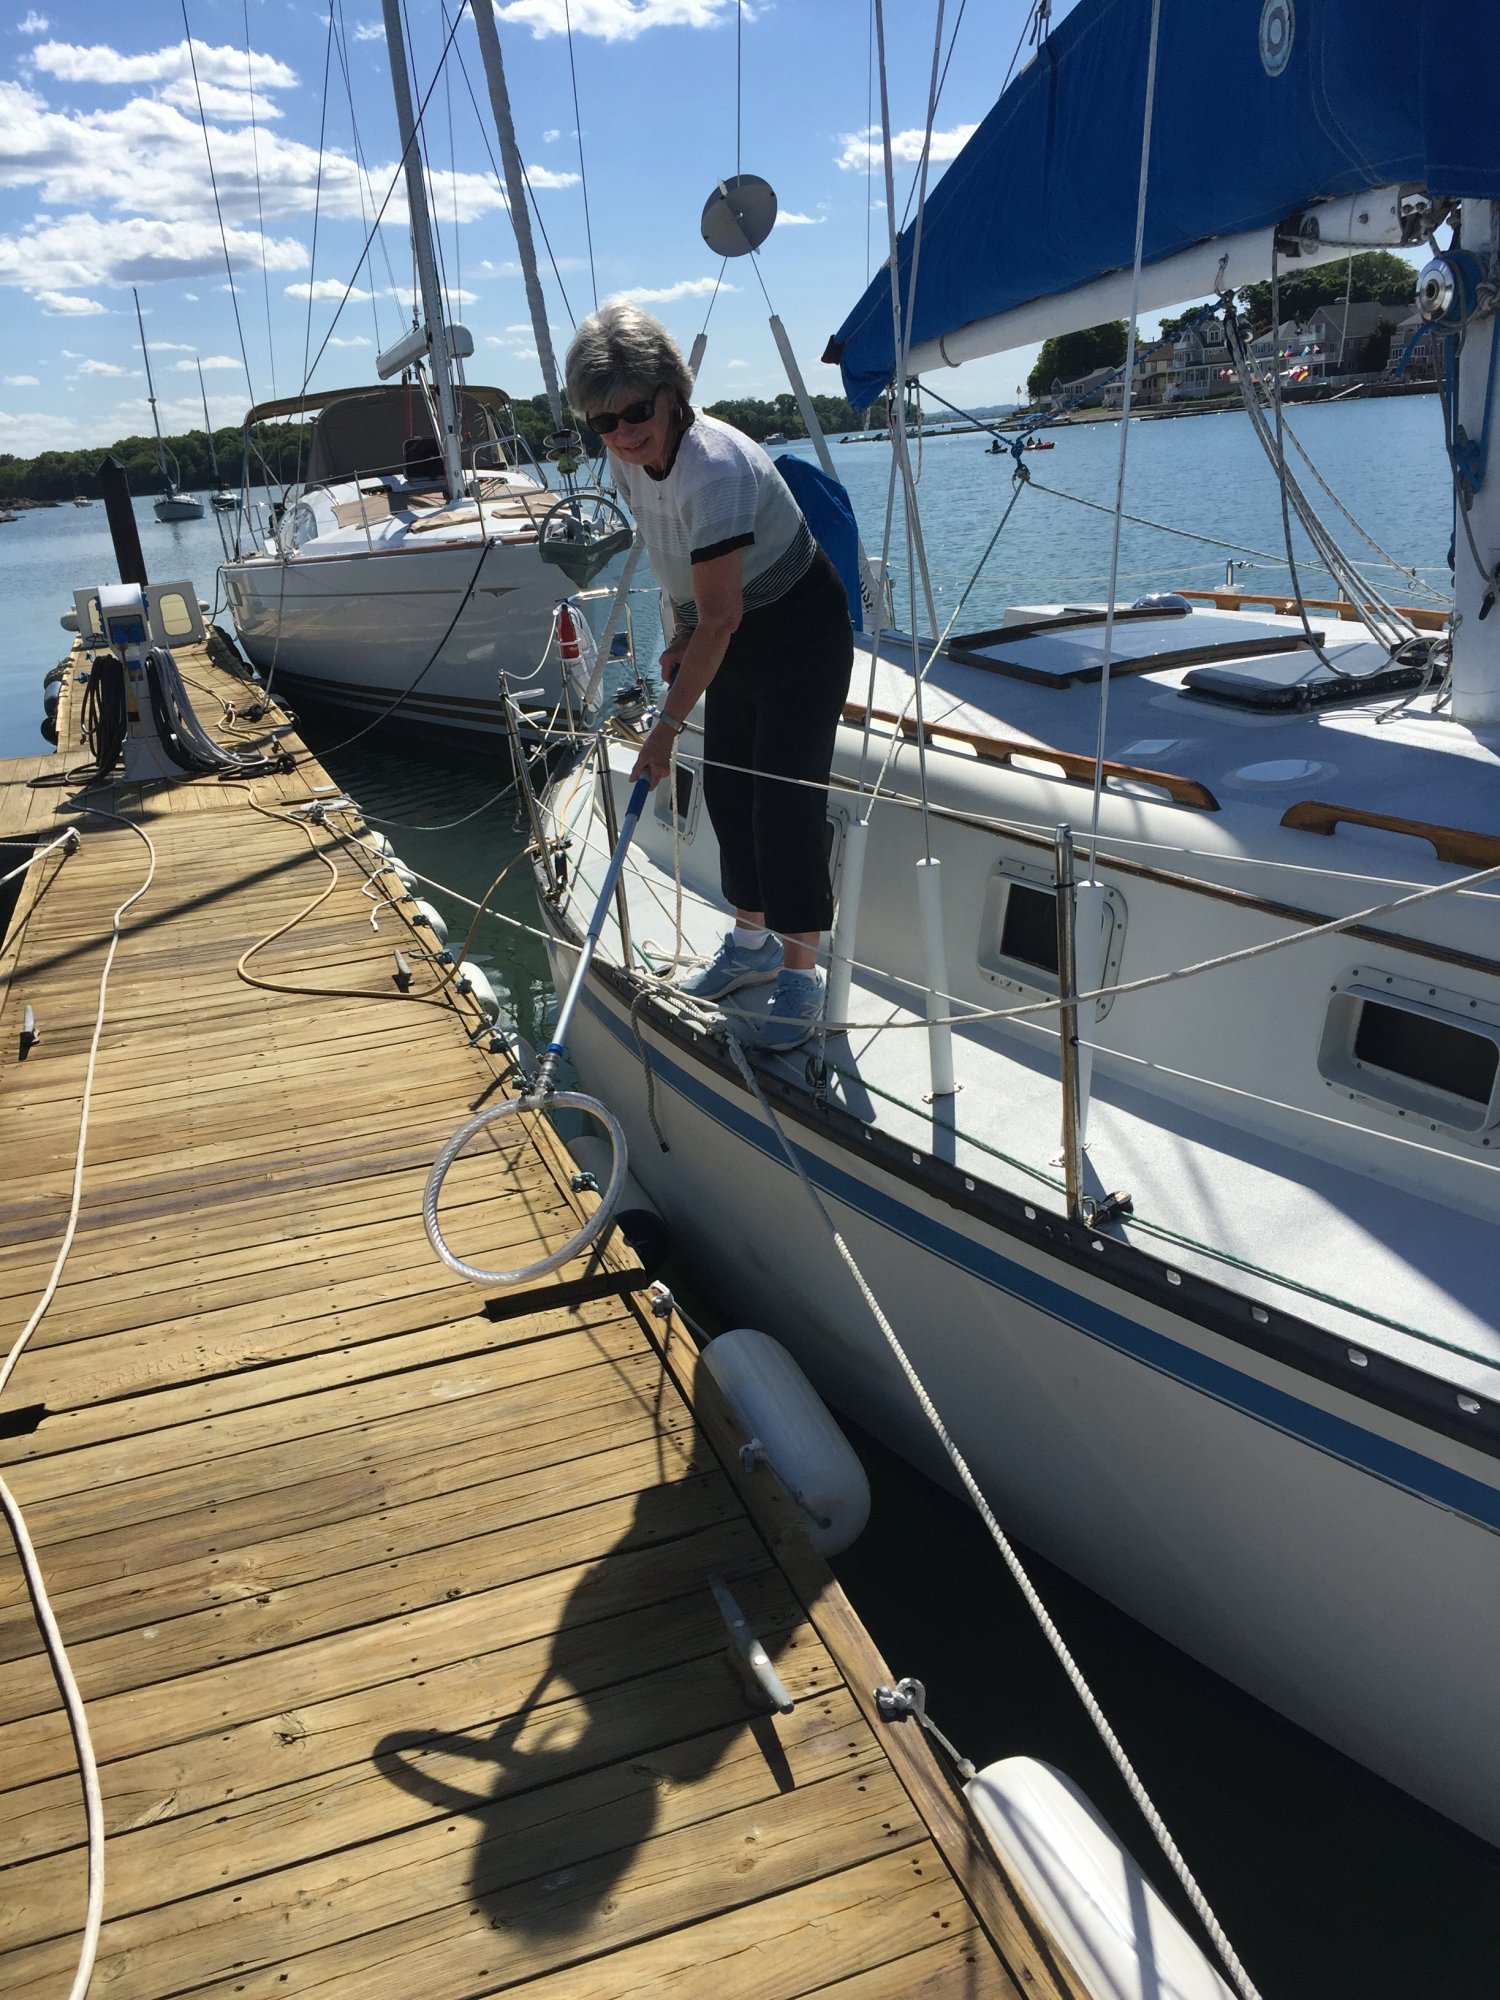 docking a sailboat single handed